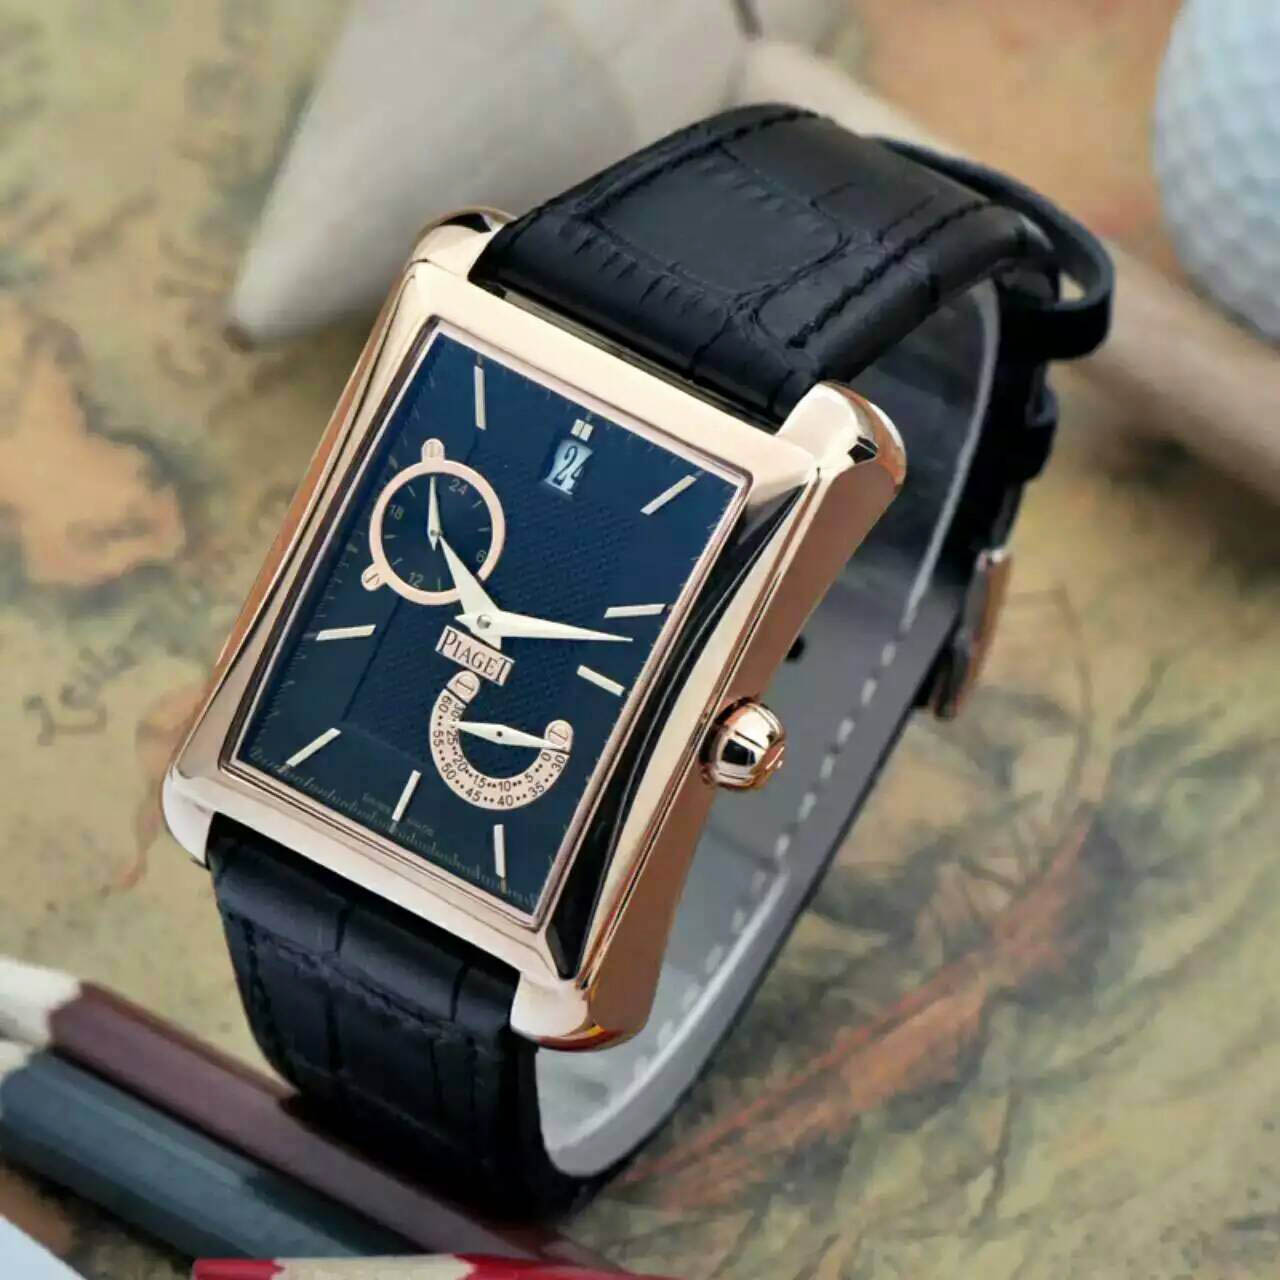 3A伯爵 PIAGET EMPERADOR系列腕錶 熱門腕錶推薦 1:1手錶